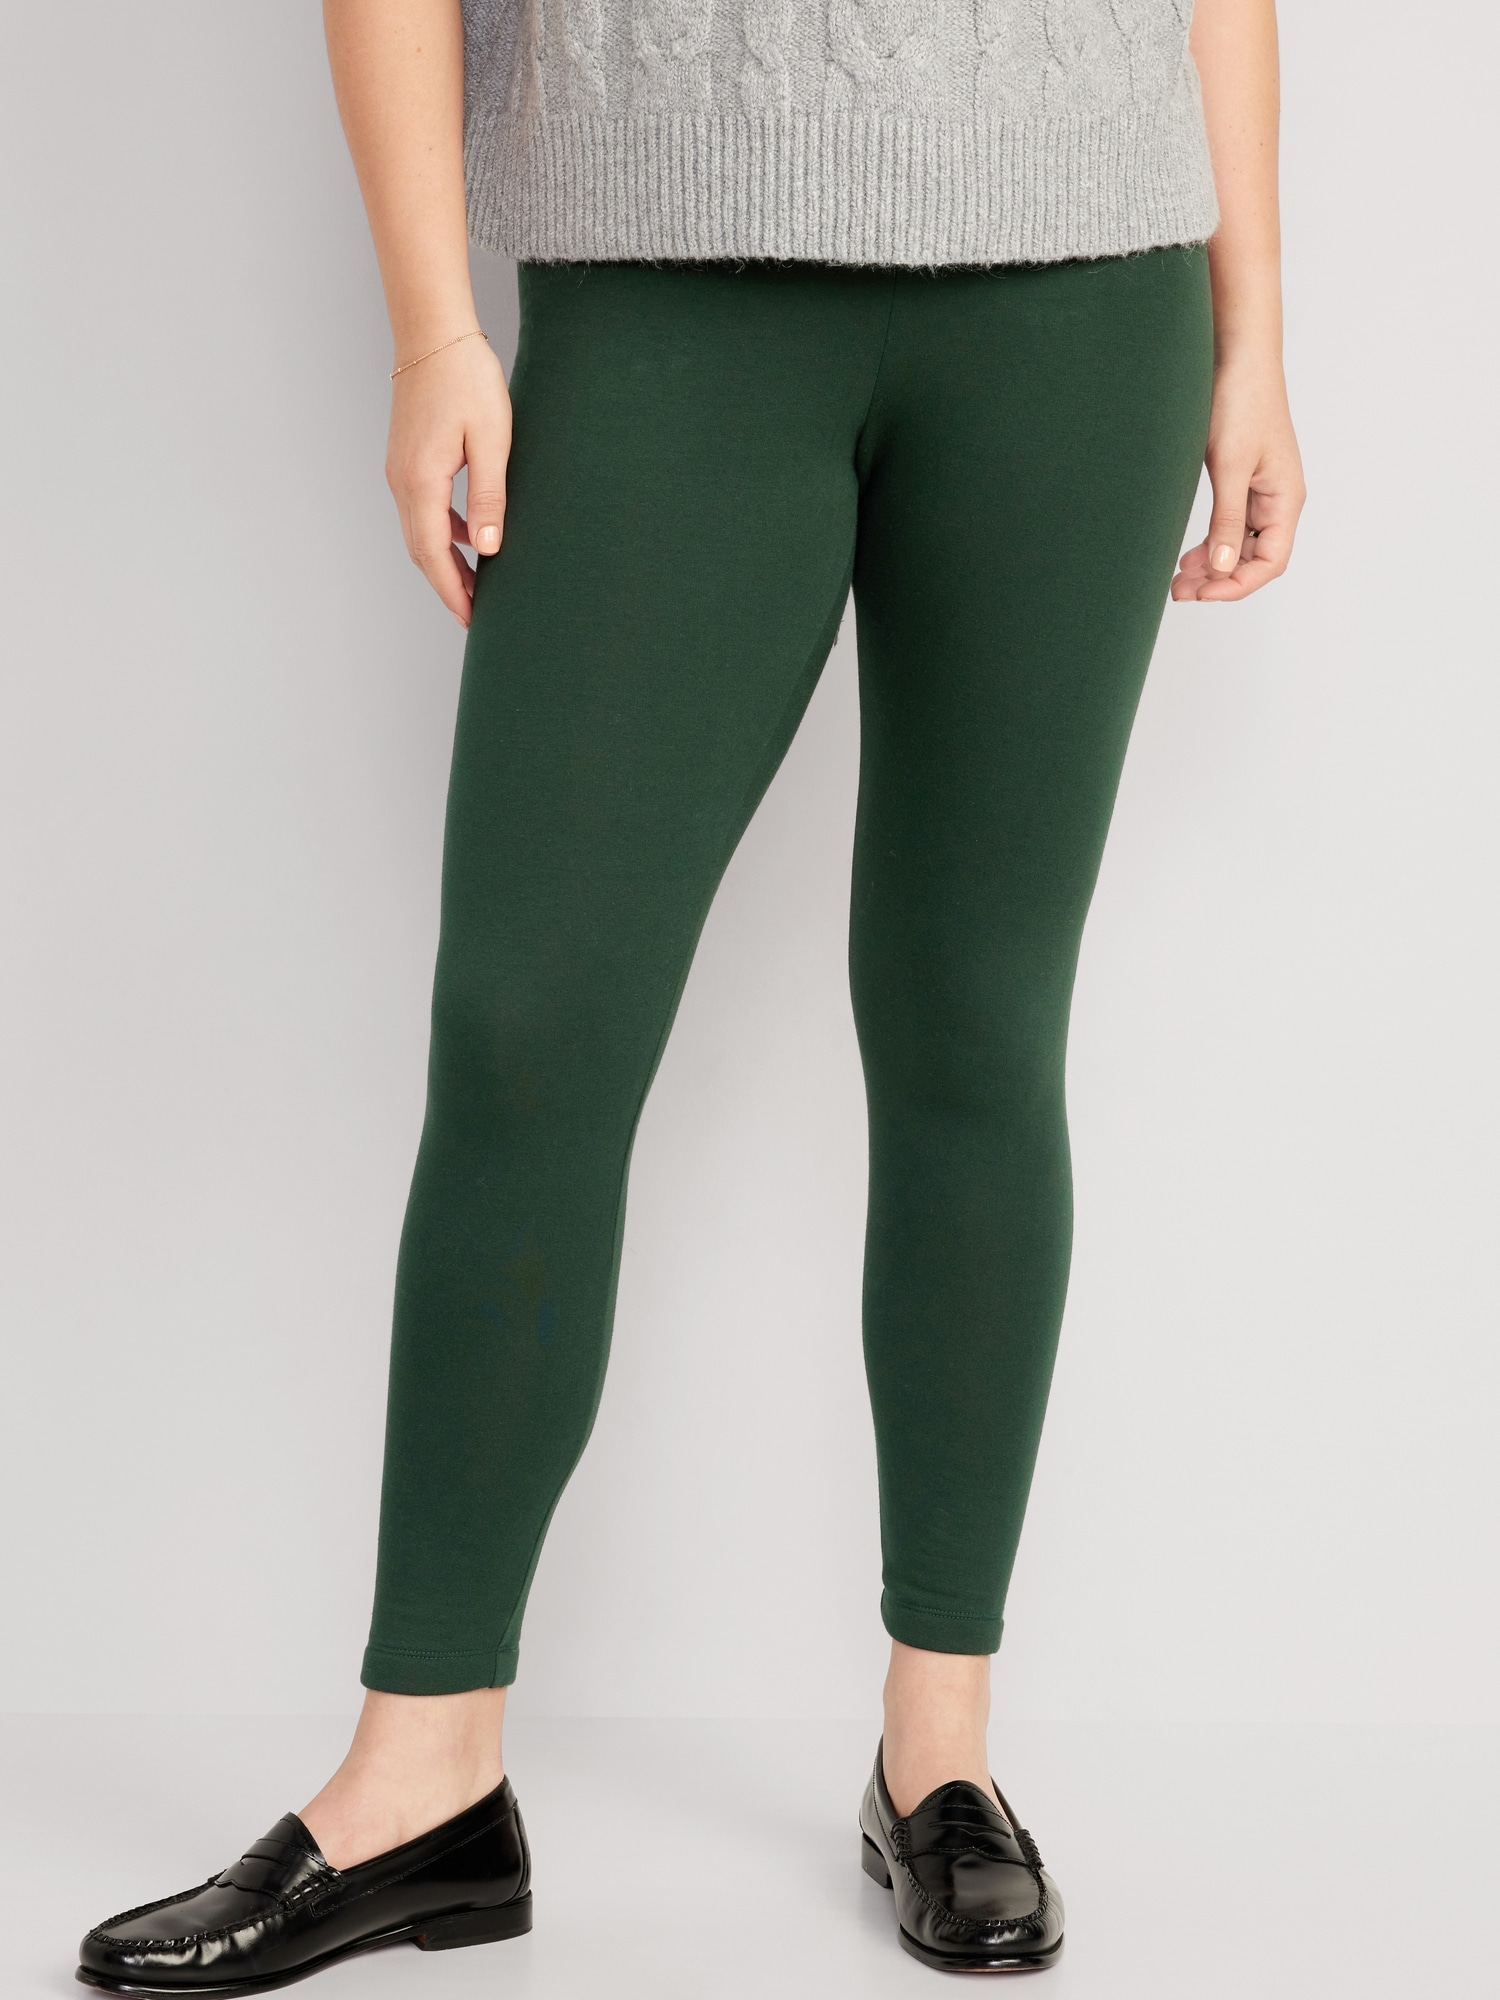 Women's Green Plus-Size Pants & Leggings